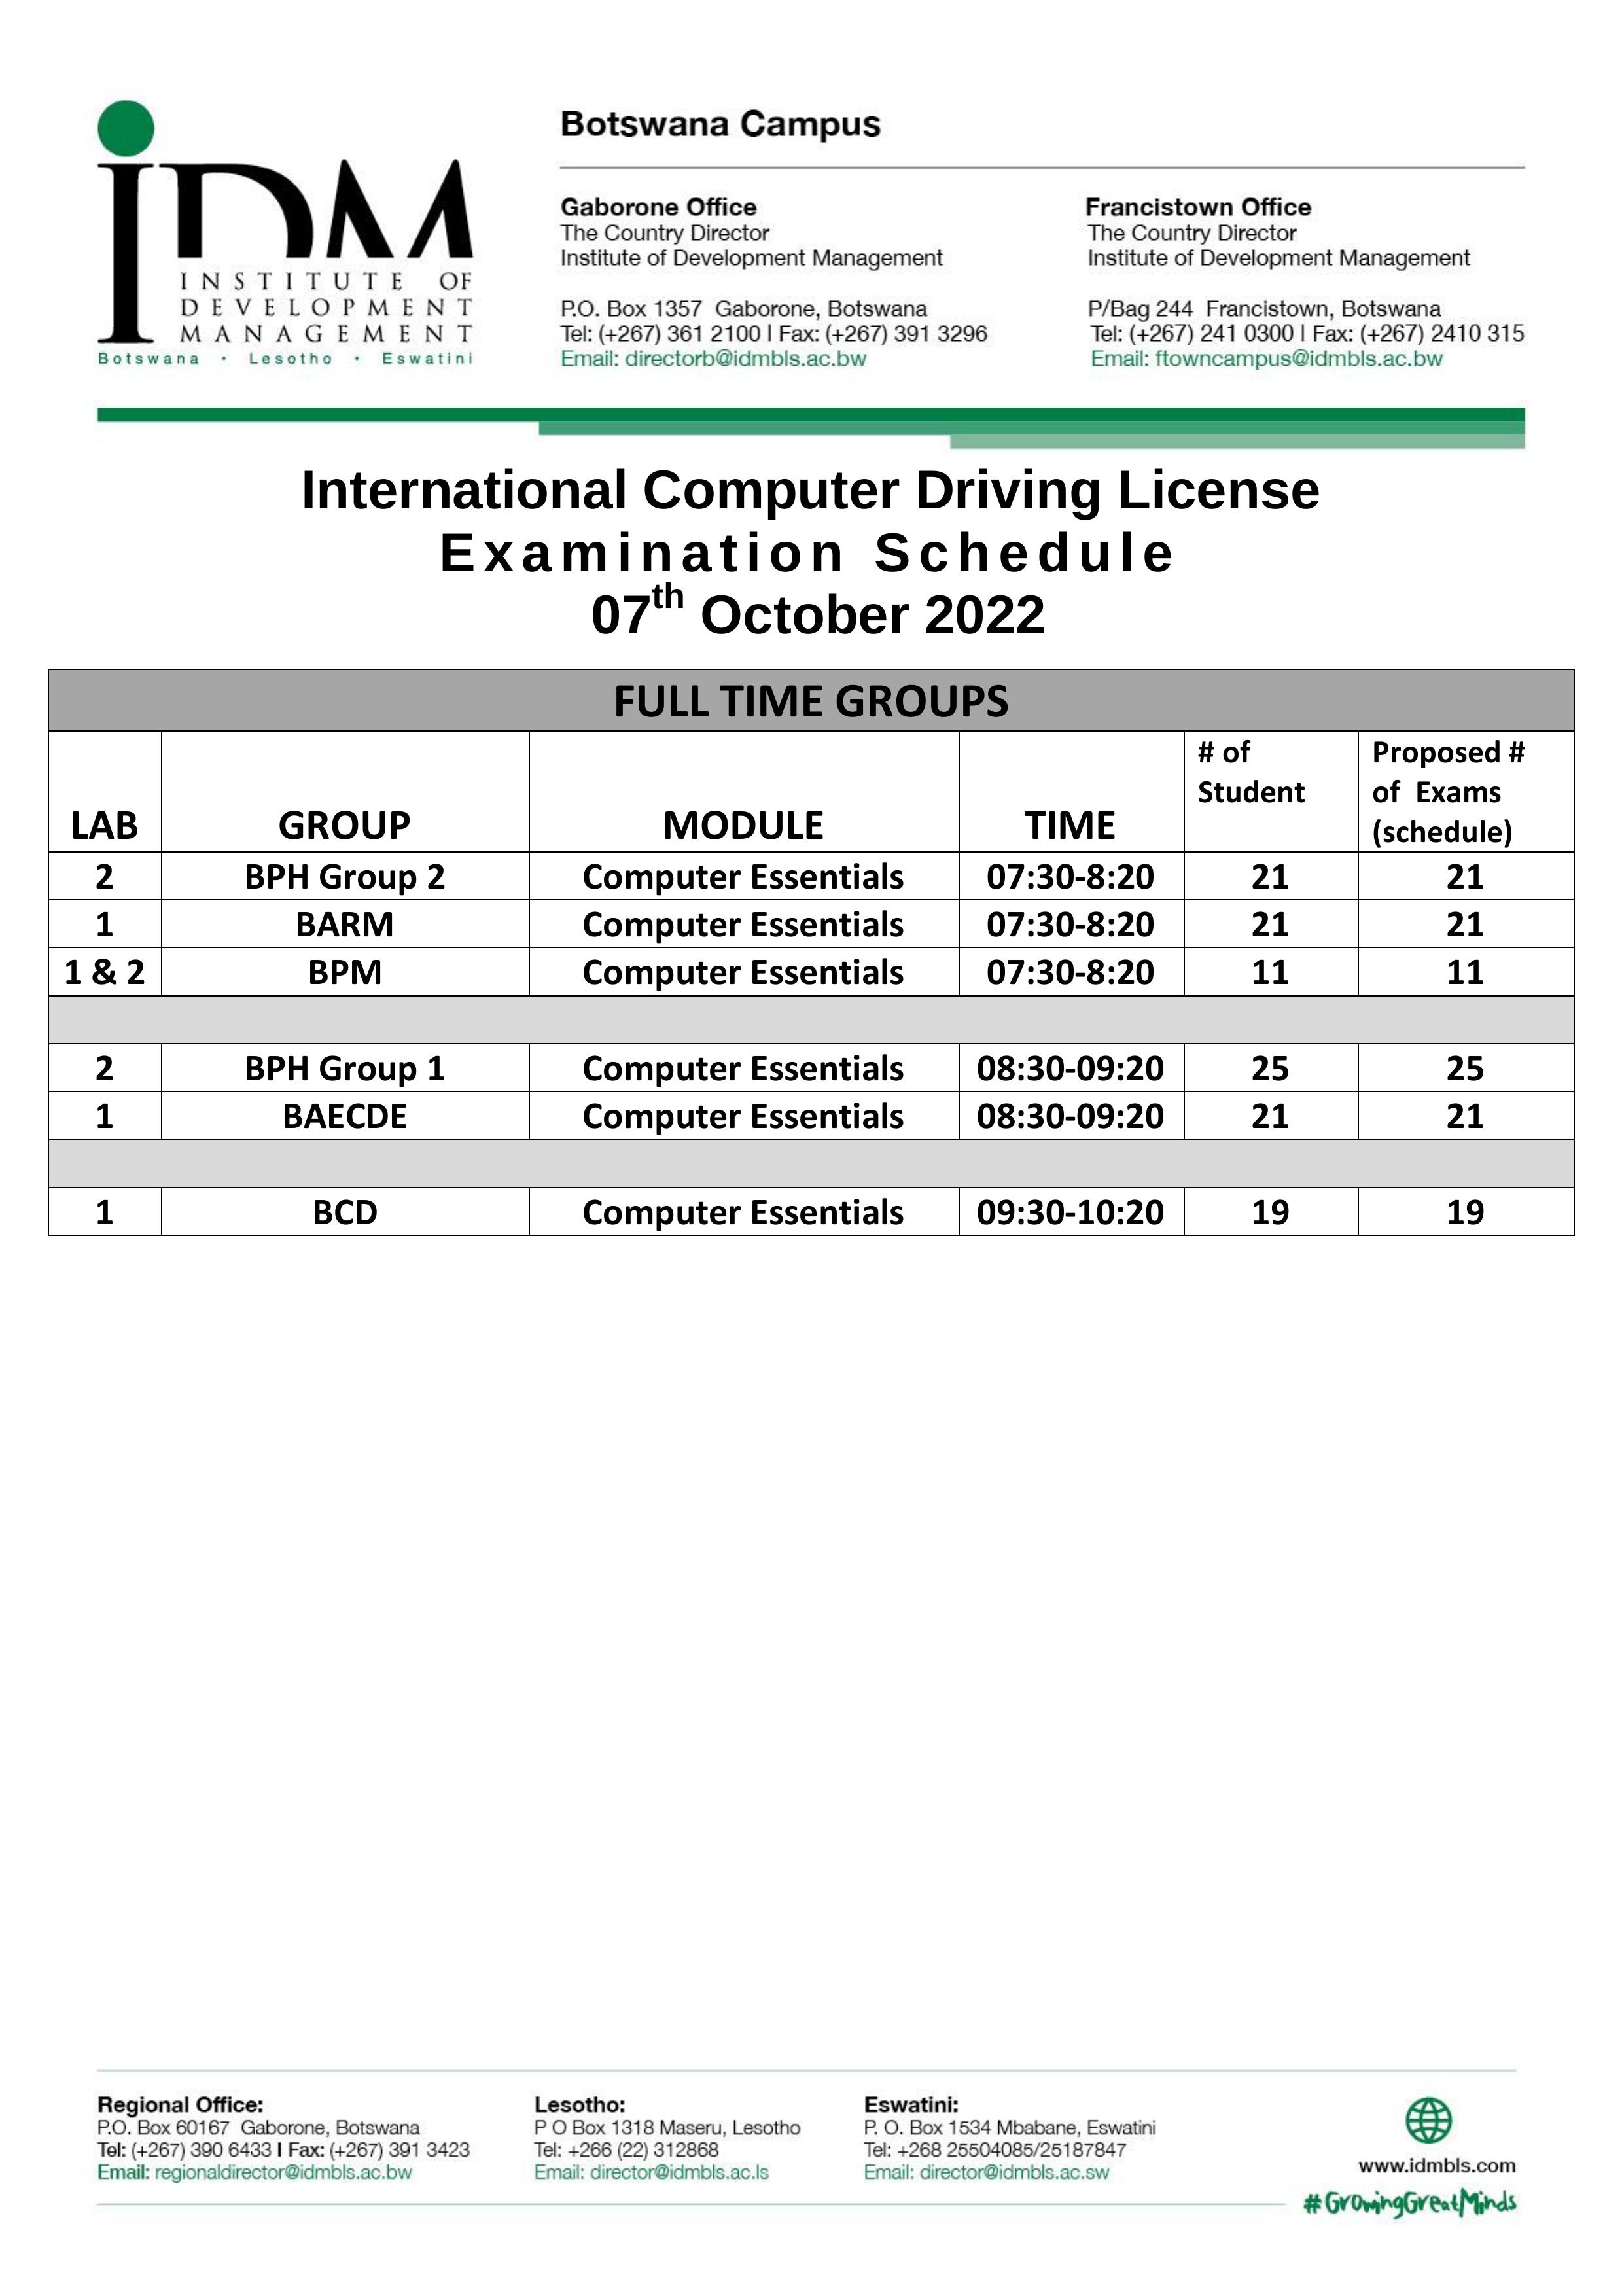 Attachment ICDL Examination Schedule-October 2022.jpg